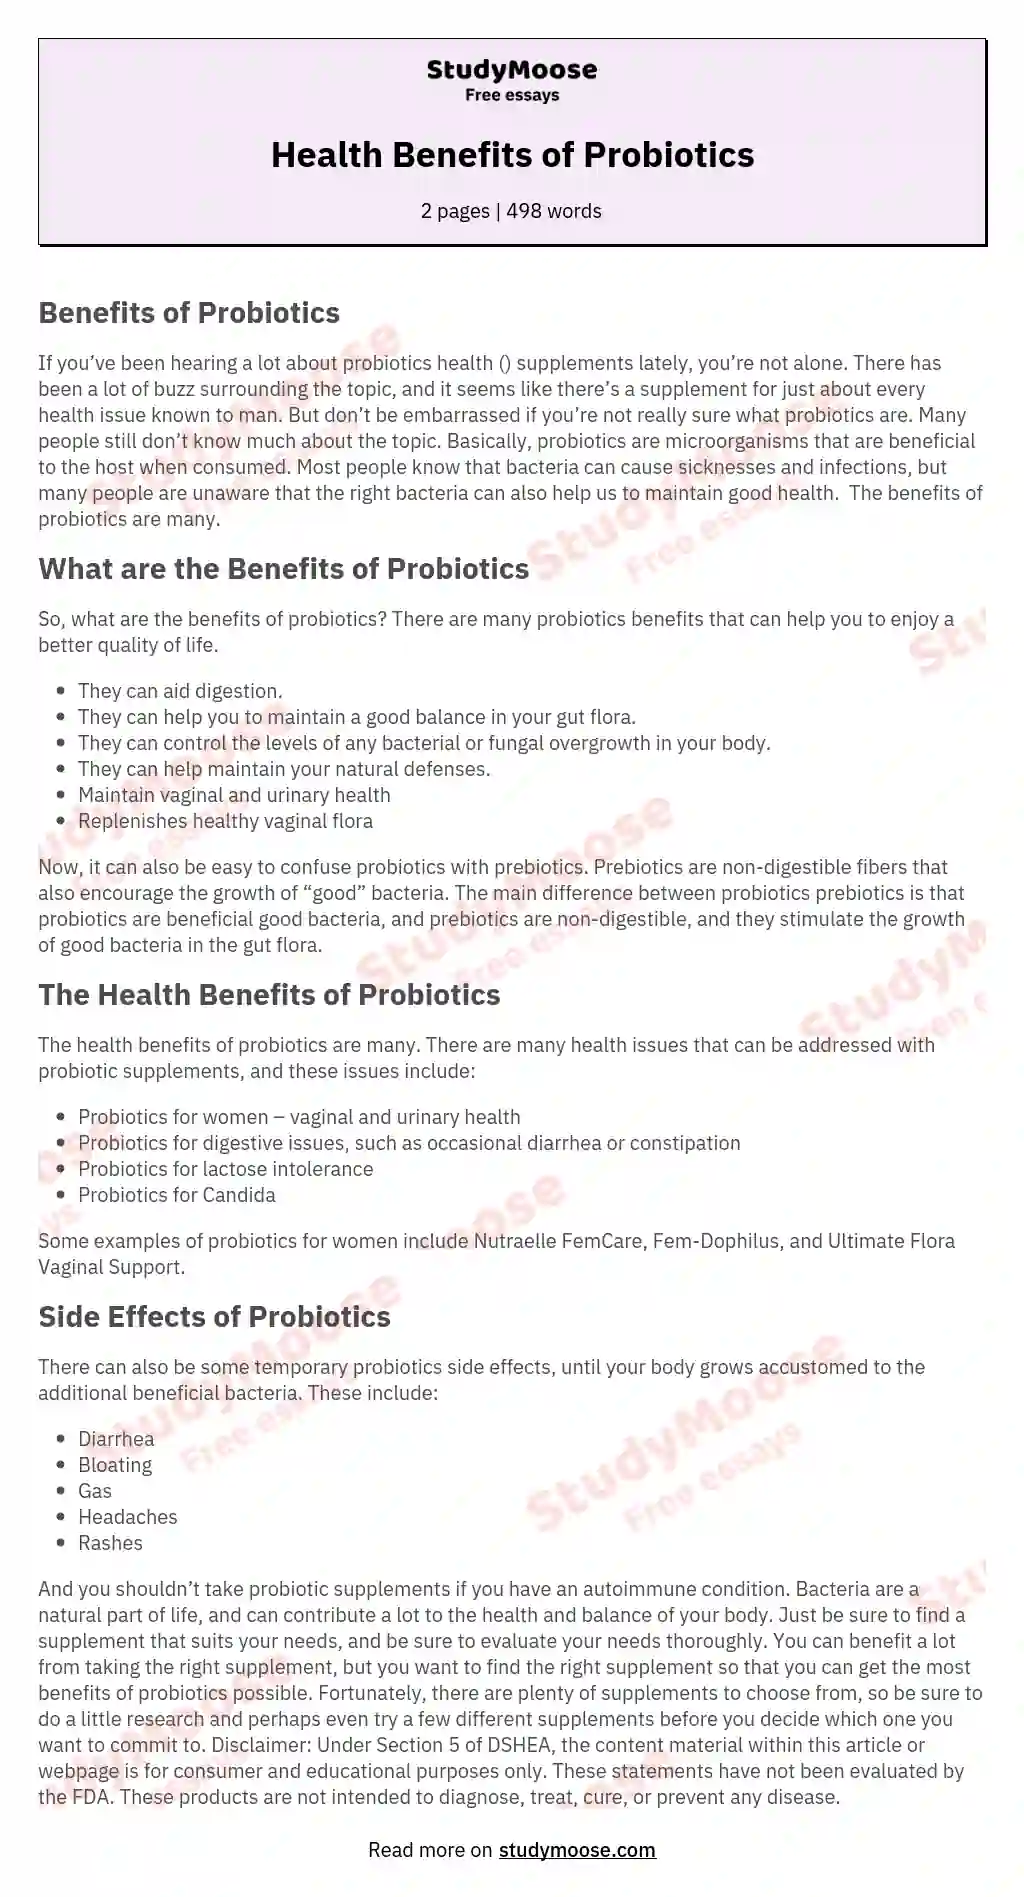 Health Benefits of Probiotics essay